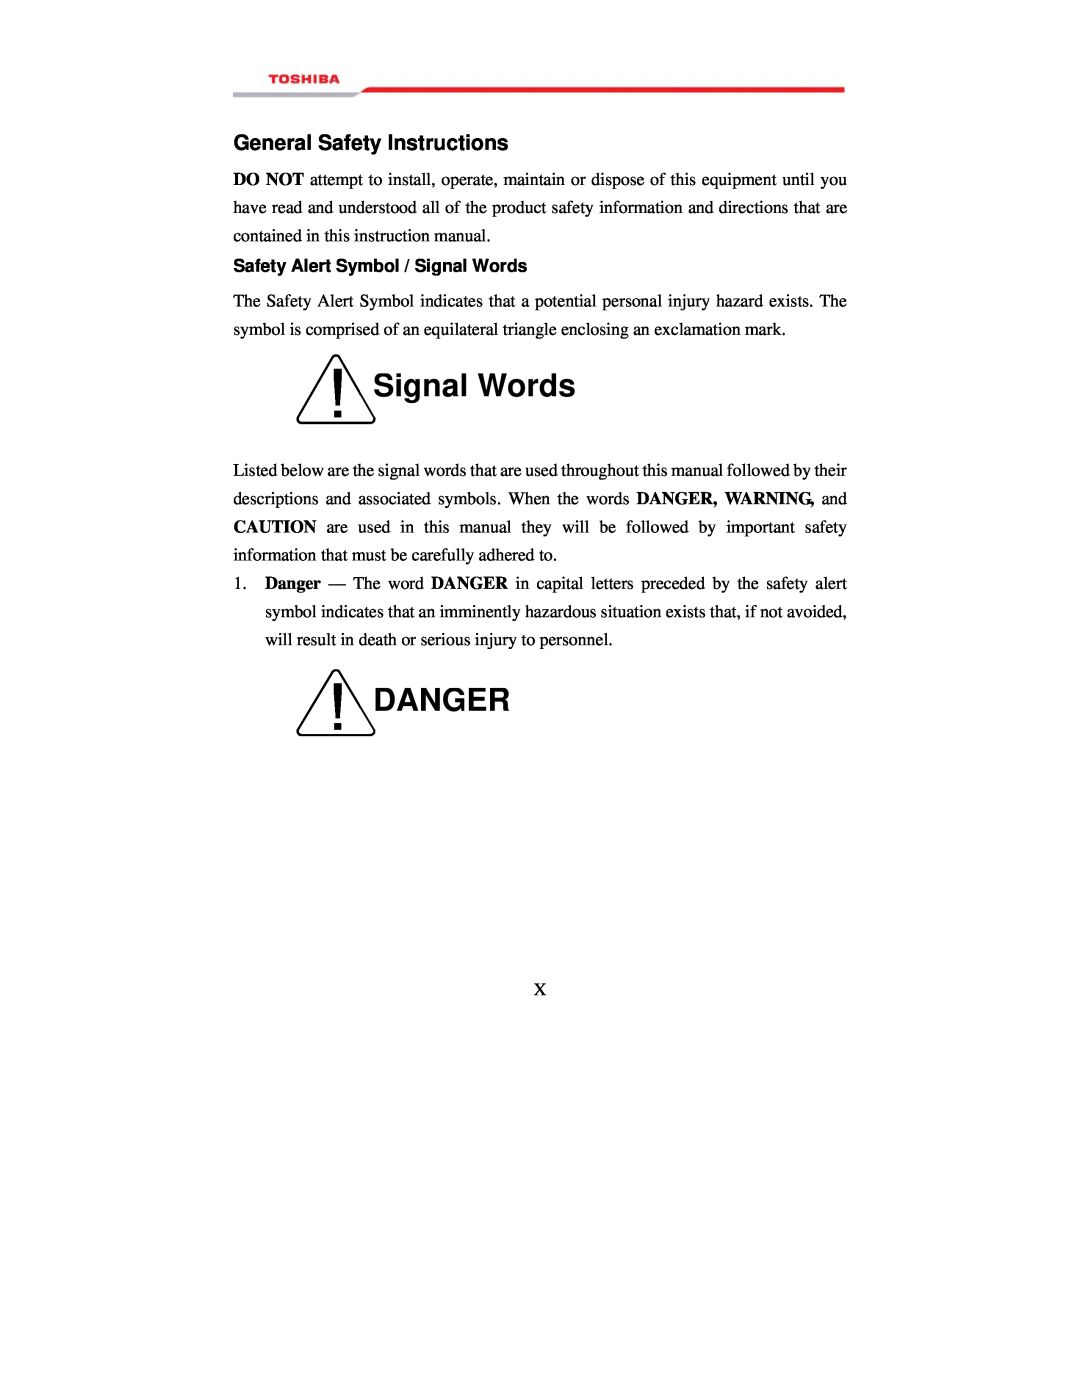 Toshiba 1000 manual Danger, General Safety Instructions, Safety Alert Symbol / Signal Words 